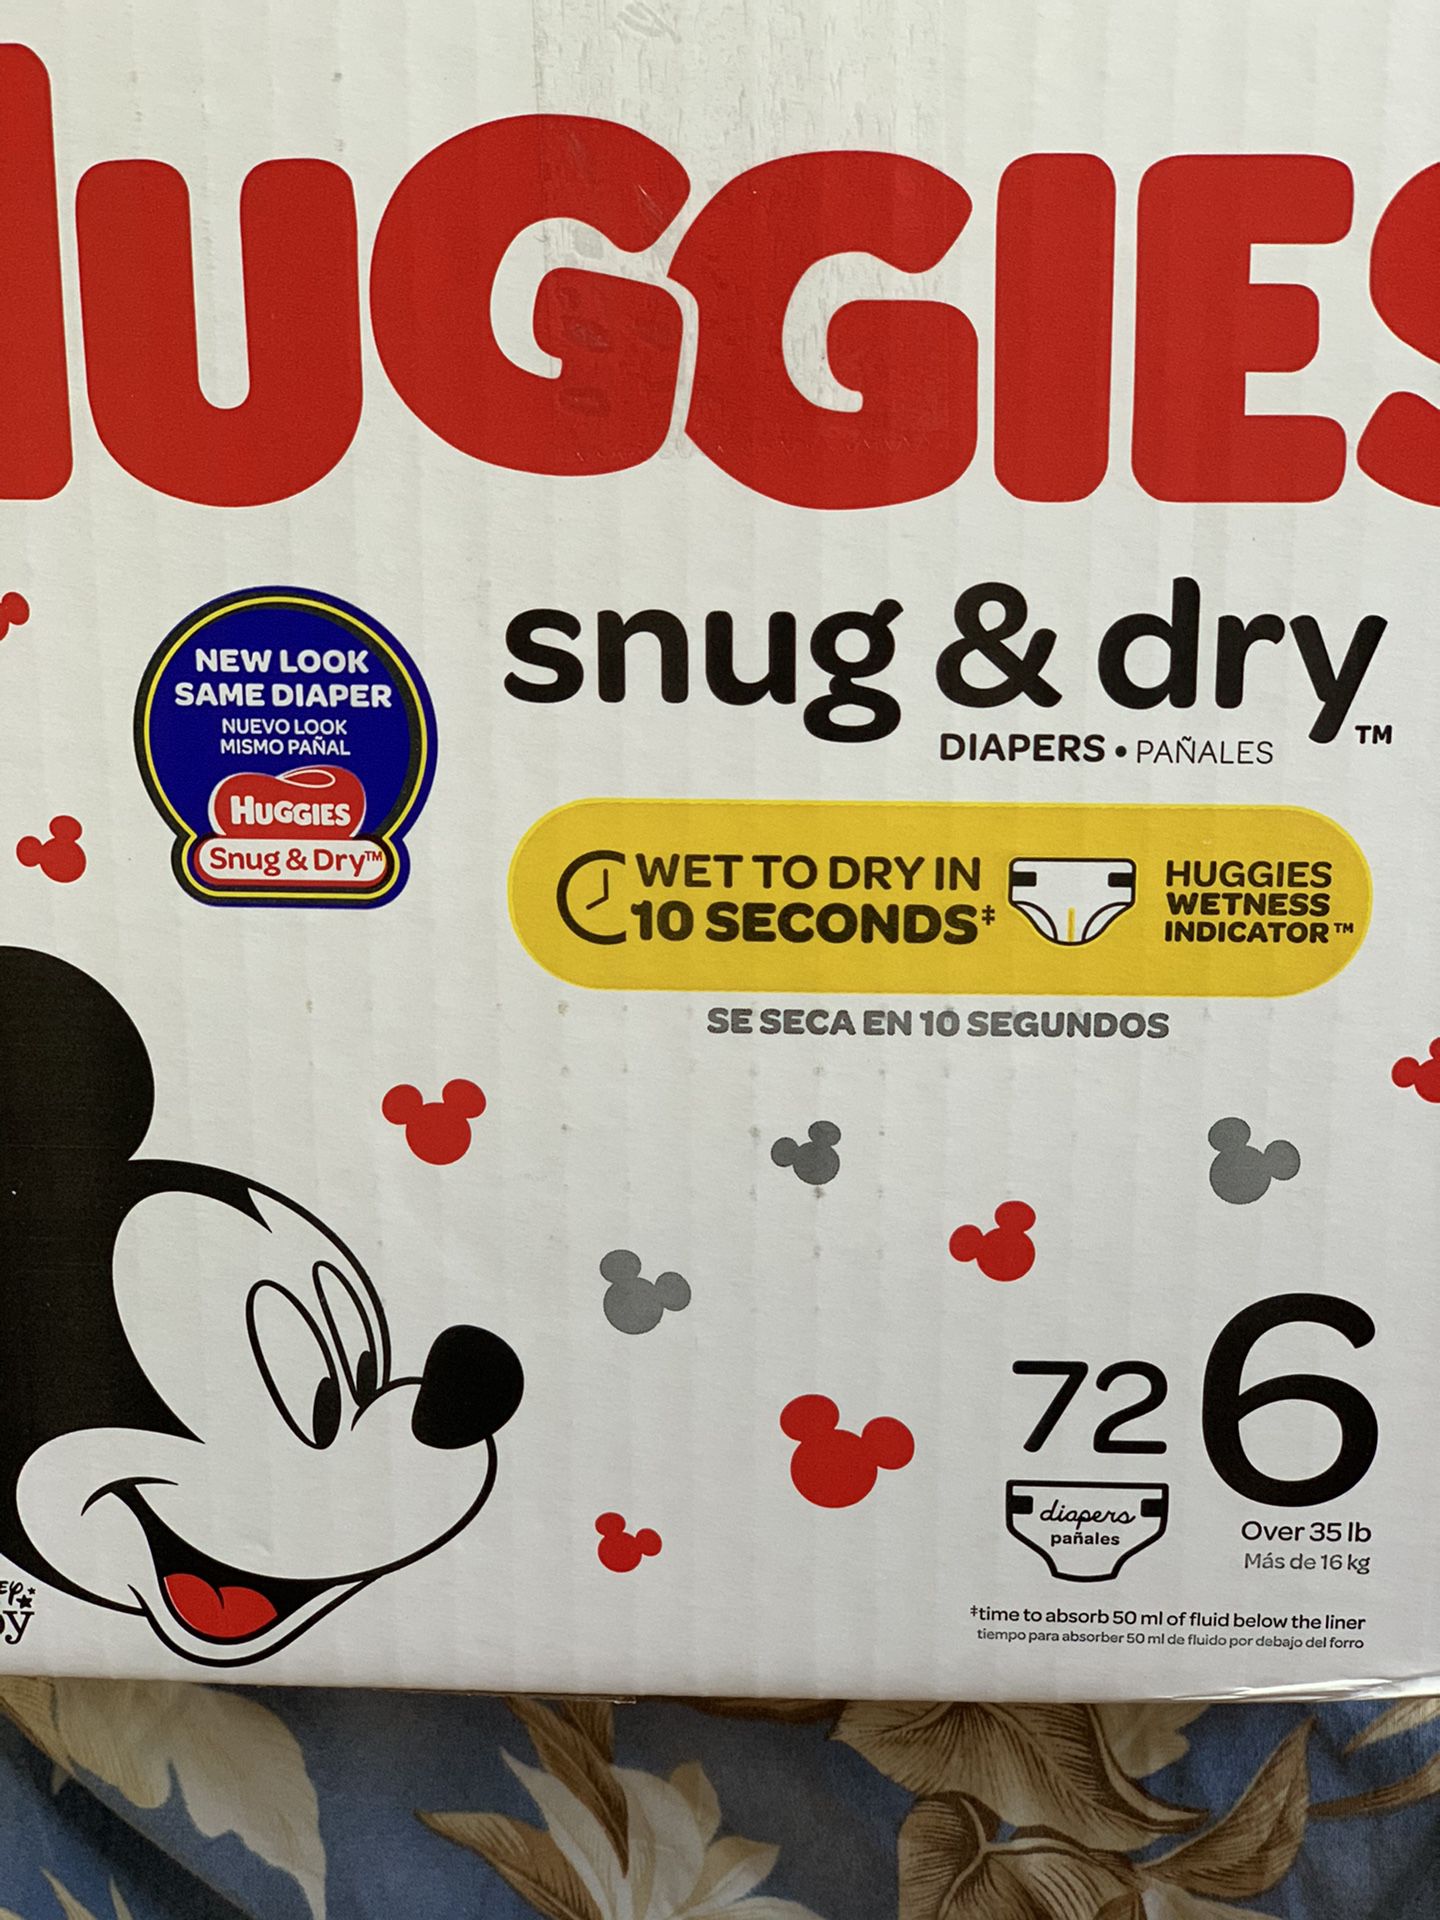 Huggies Snug & Dry Size 6 (72) diapers